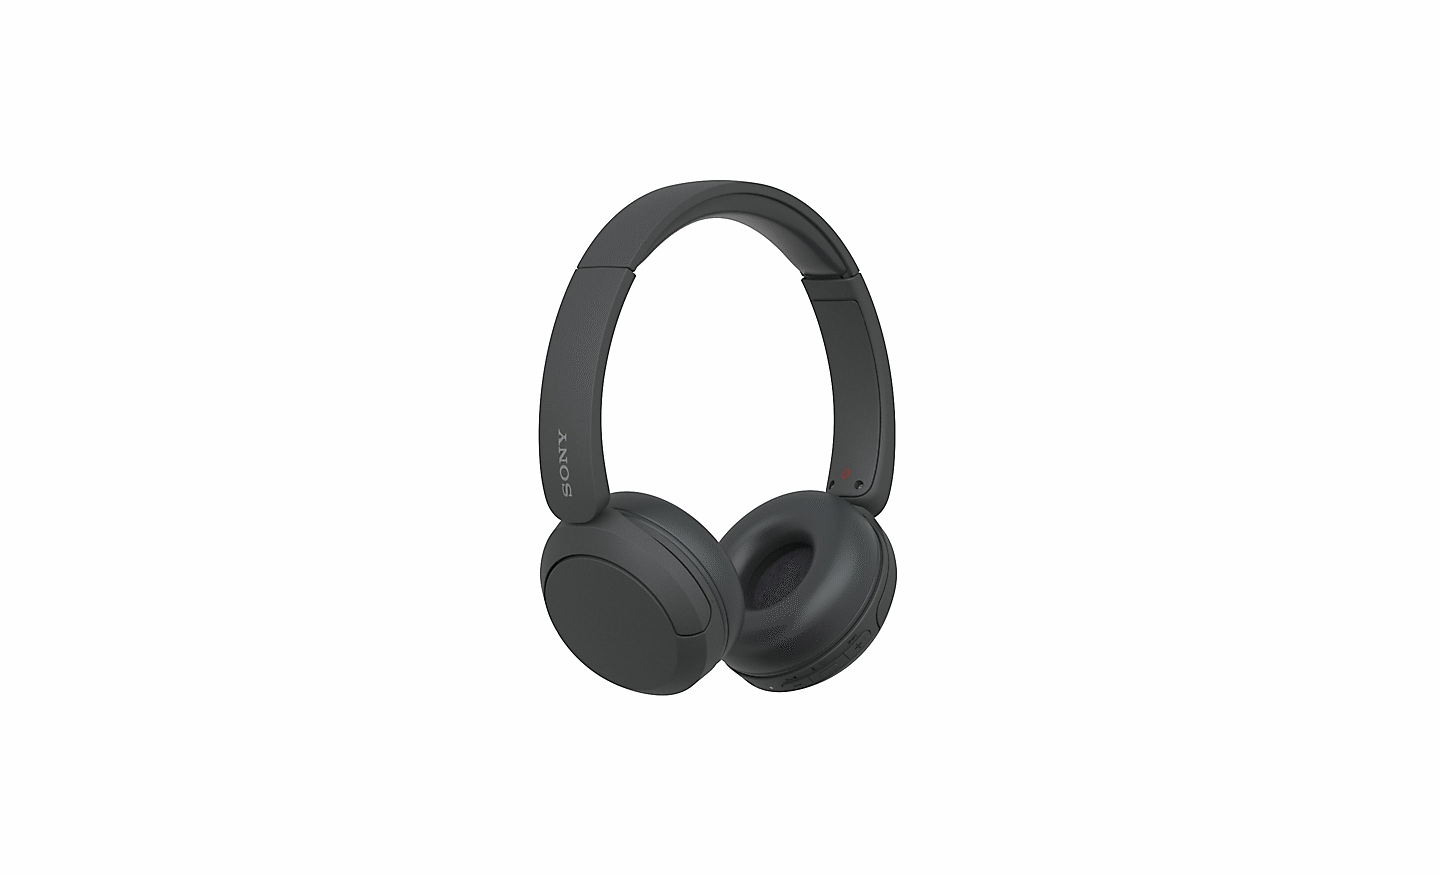 Slika crnih slušalica Sony WH-CH520 na bijeloj pozadini